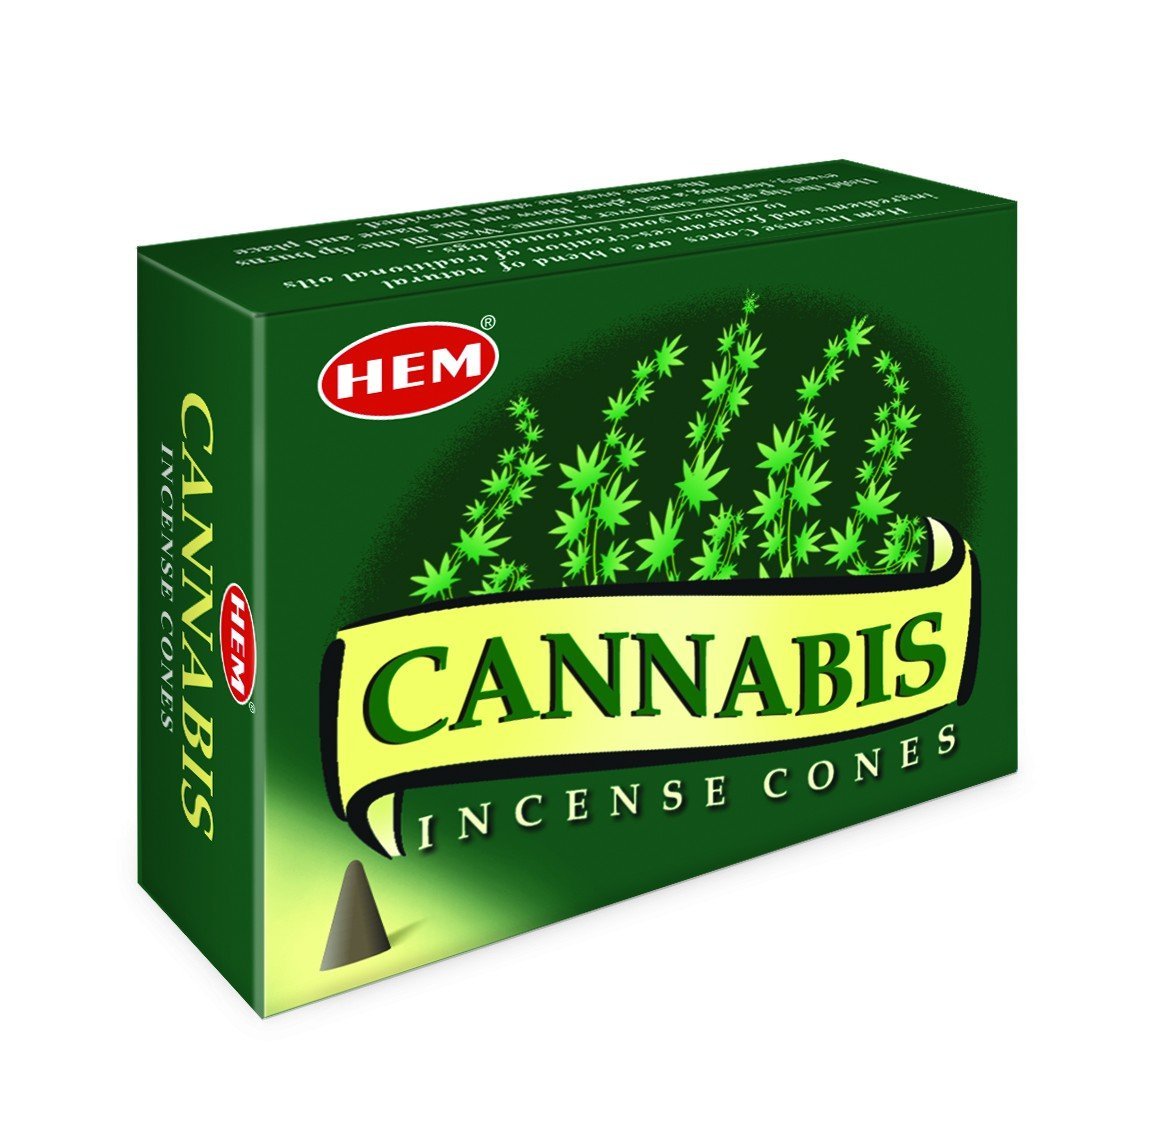 HEM - Cannabis - 120 Incense Cones